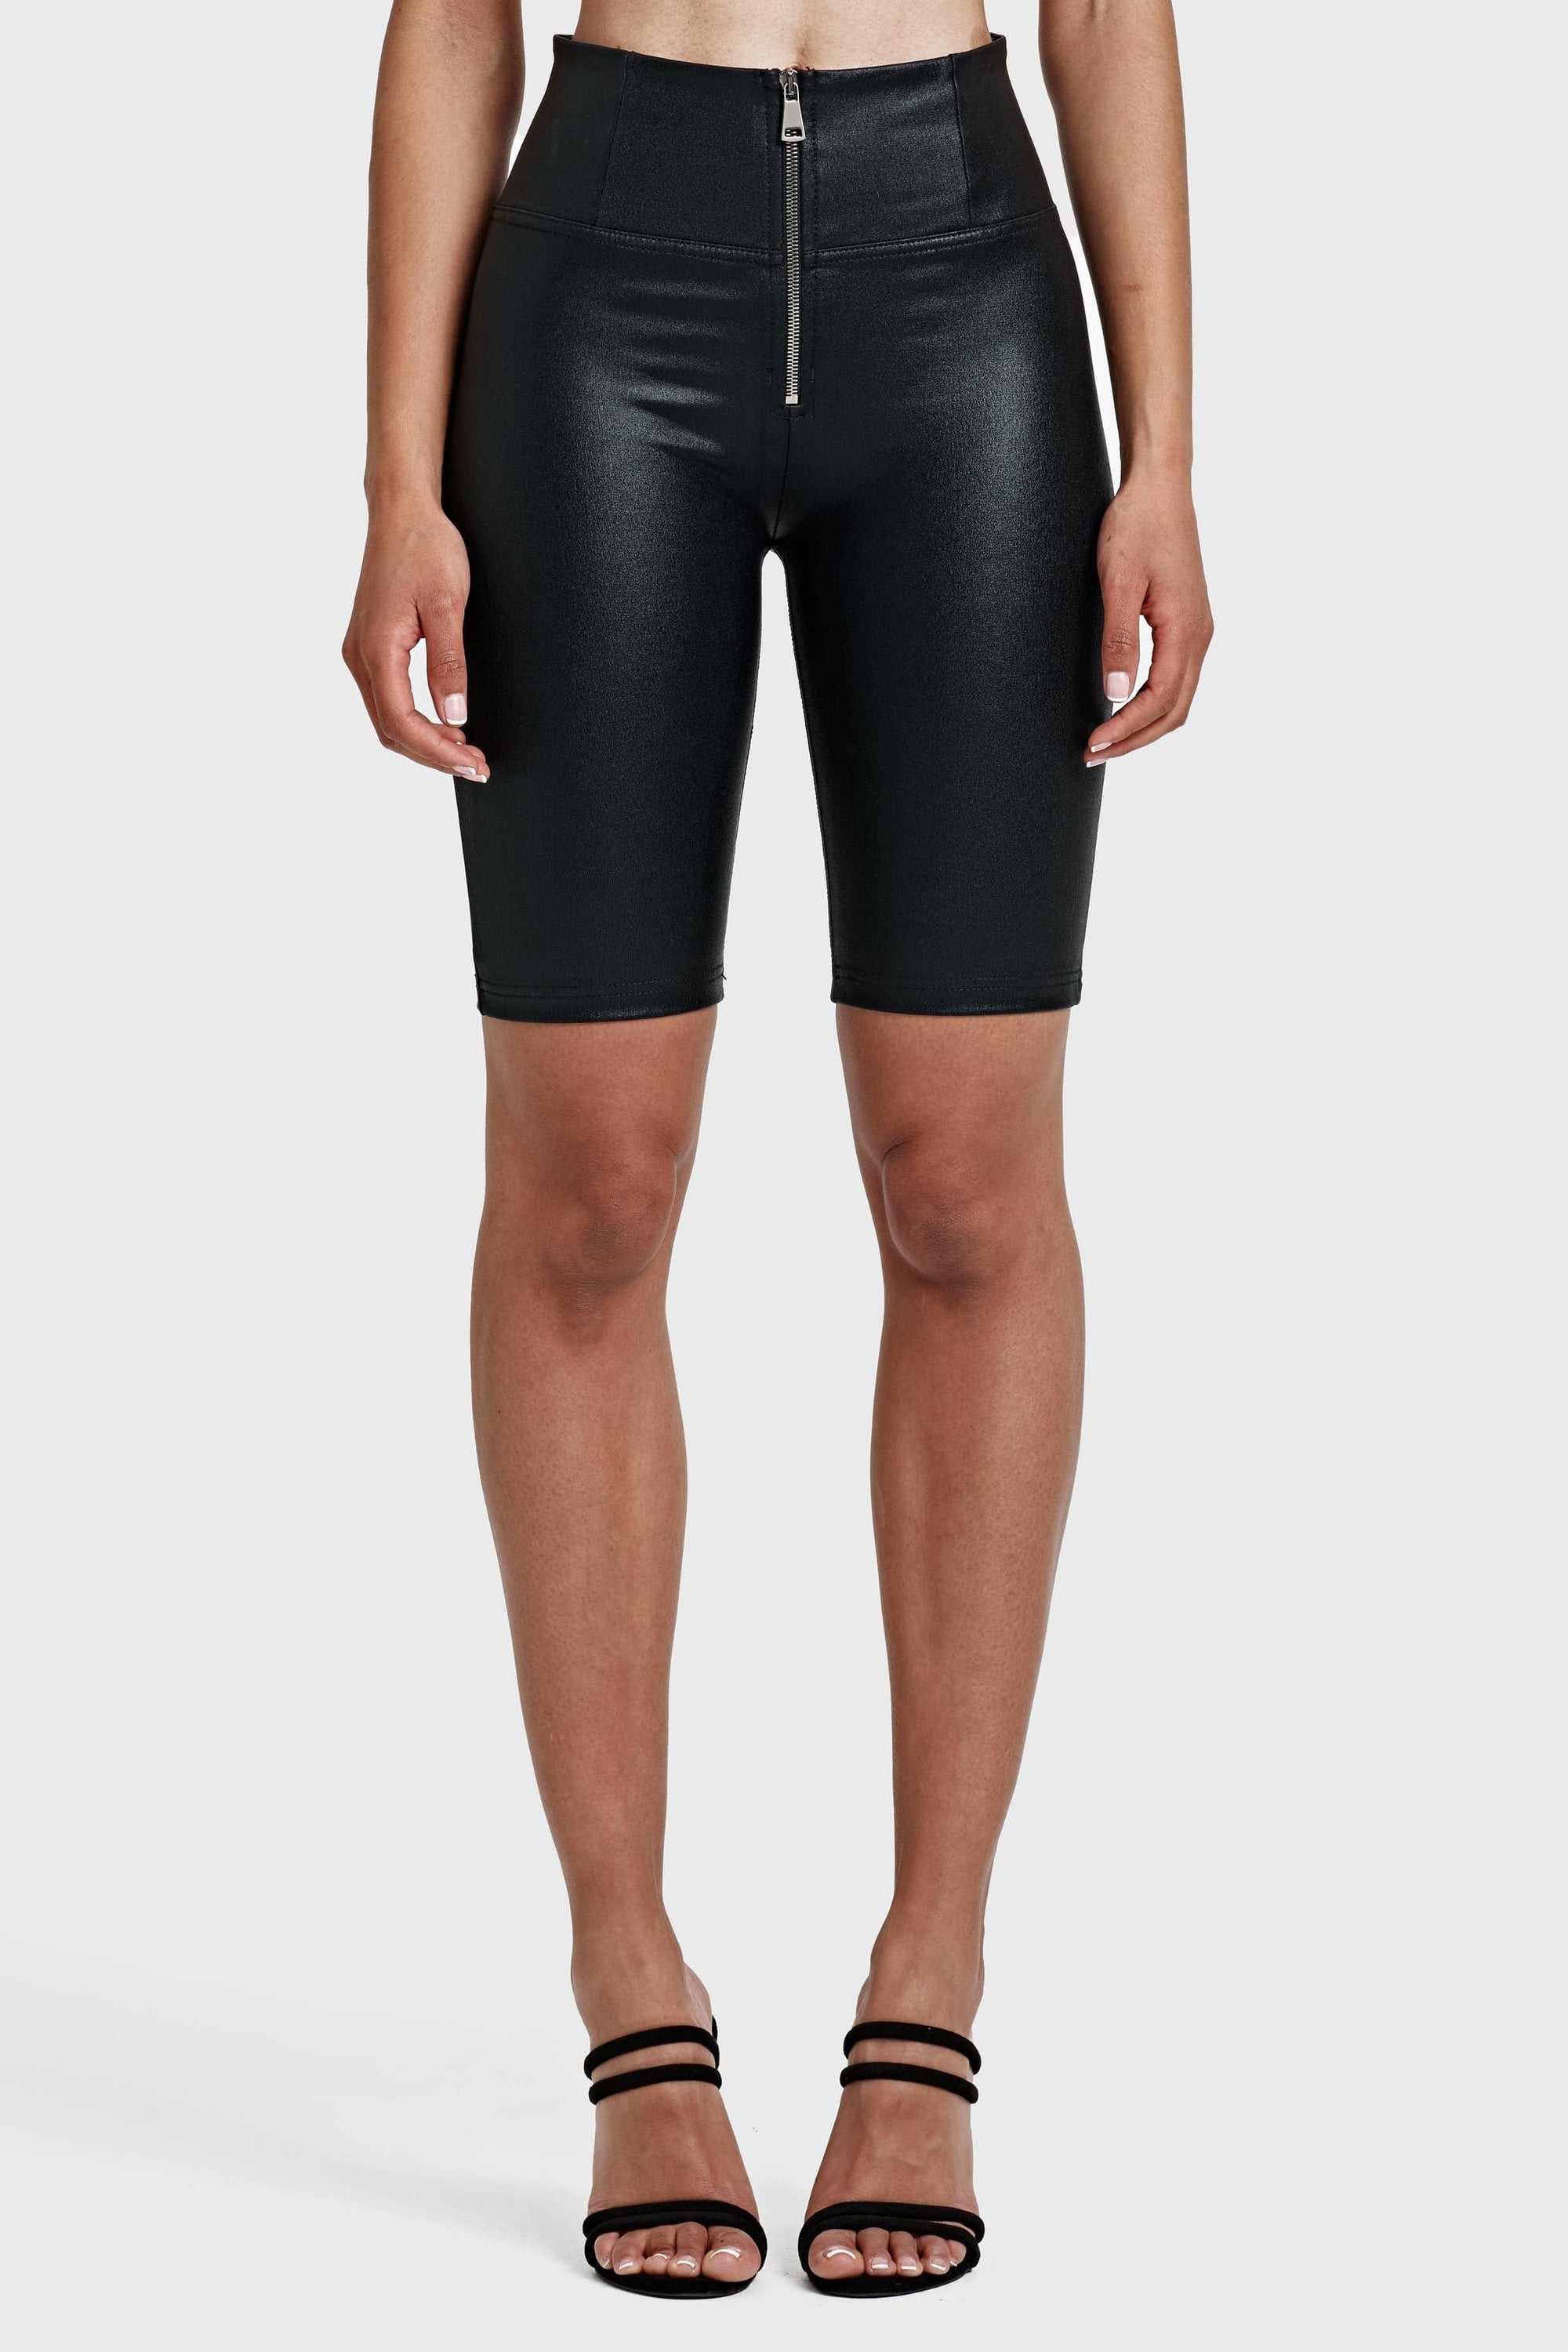 WR.UP® Metallic Lurex - High Waisted - Biker Shorts - Midnight Black 8